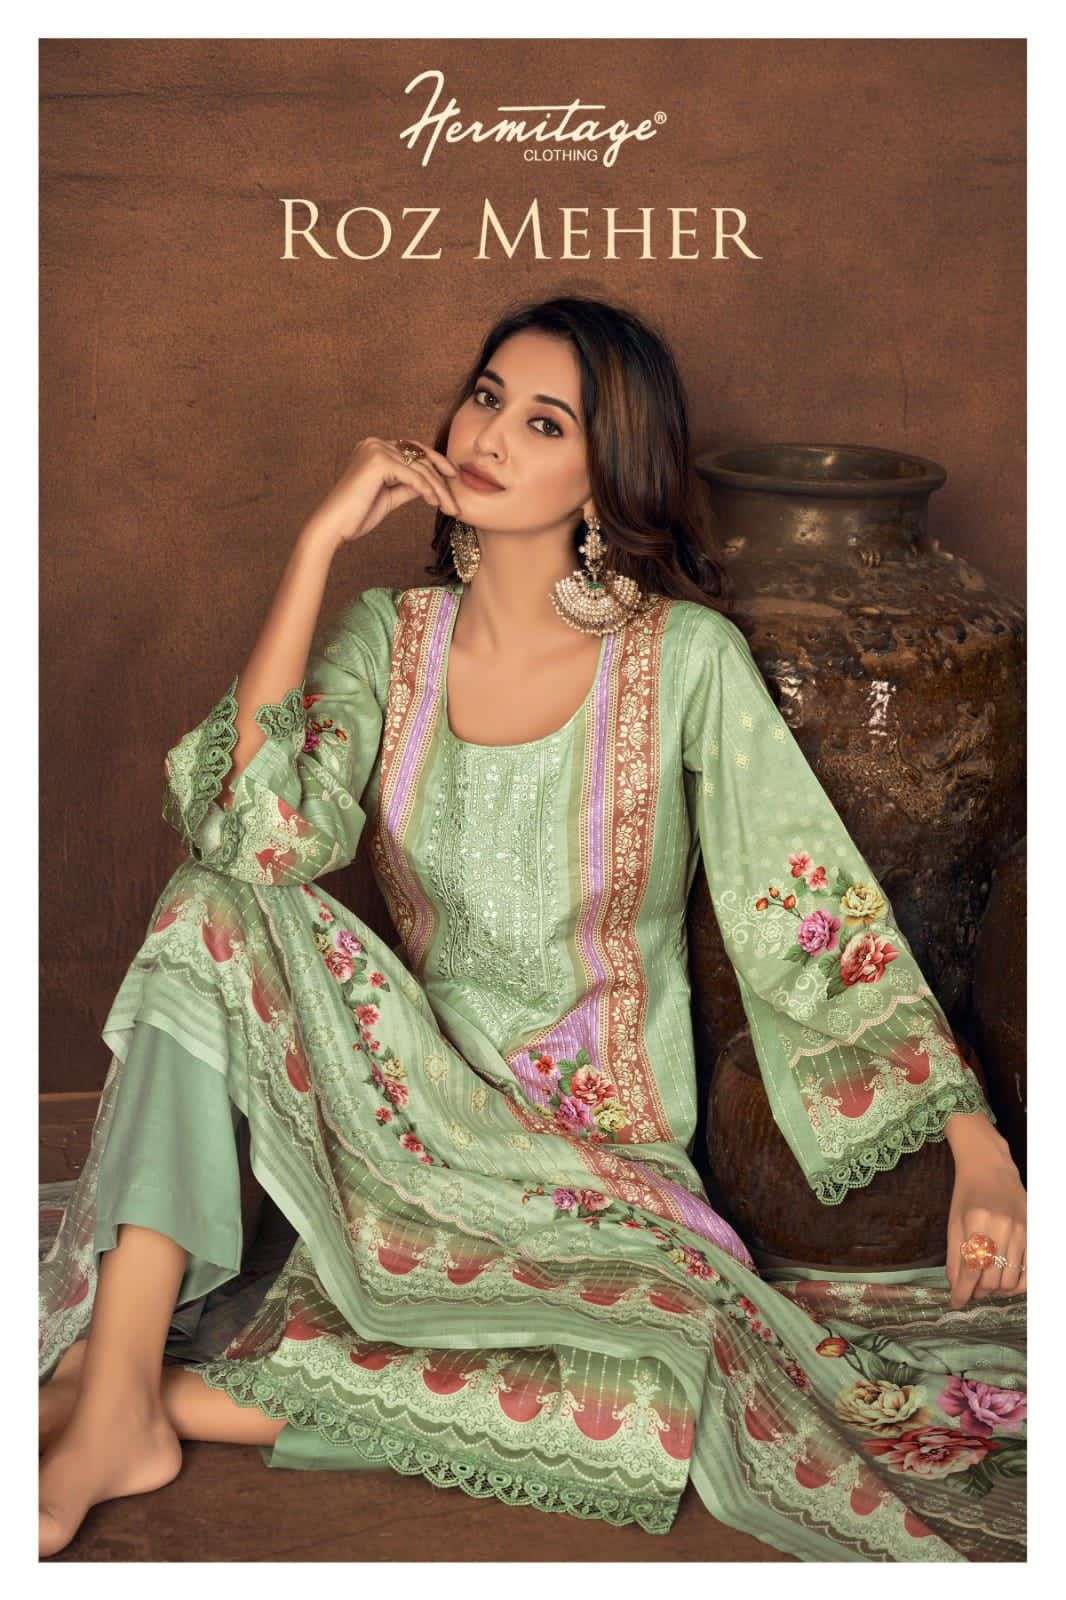 Hermitage Roz Meher Fancy Pakistani Style Cotton Ladies Suit Suppliers